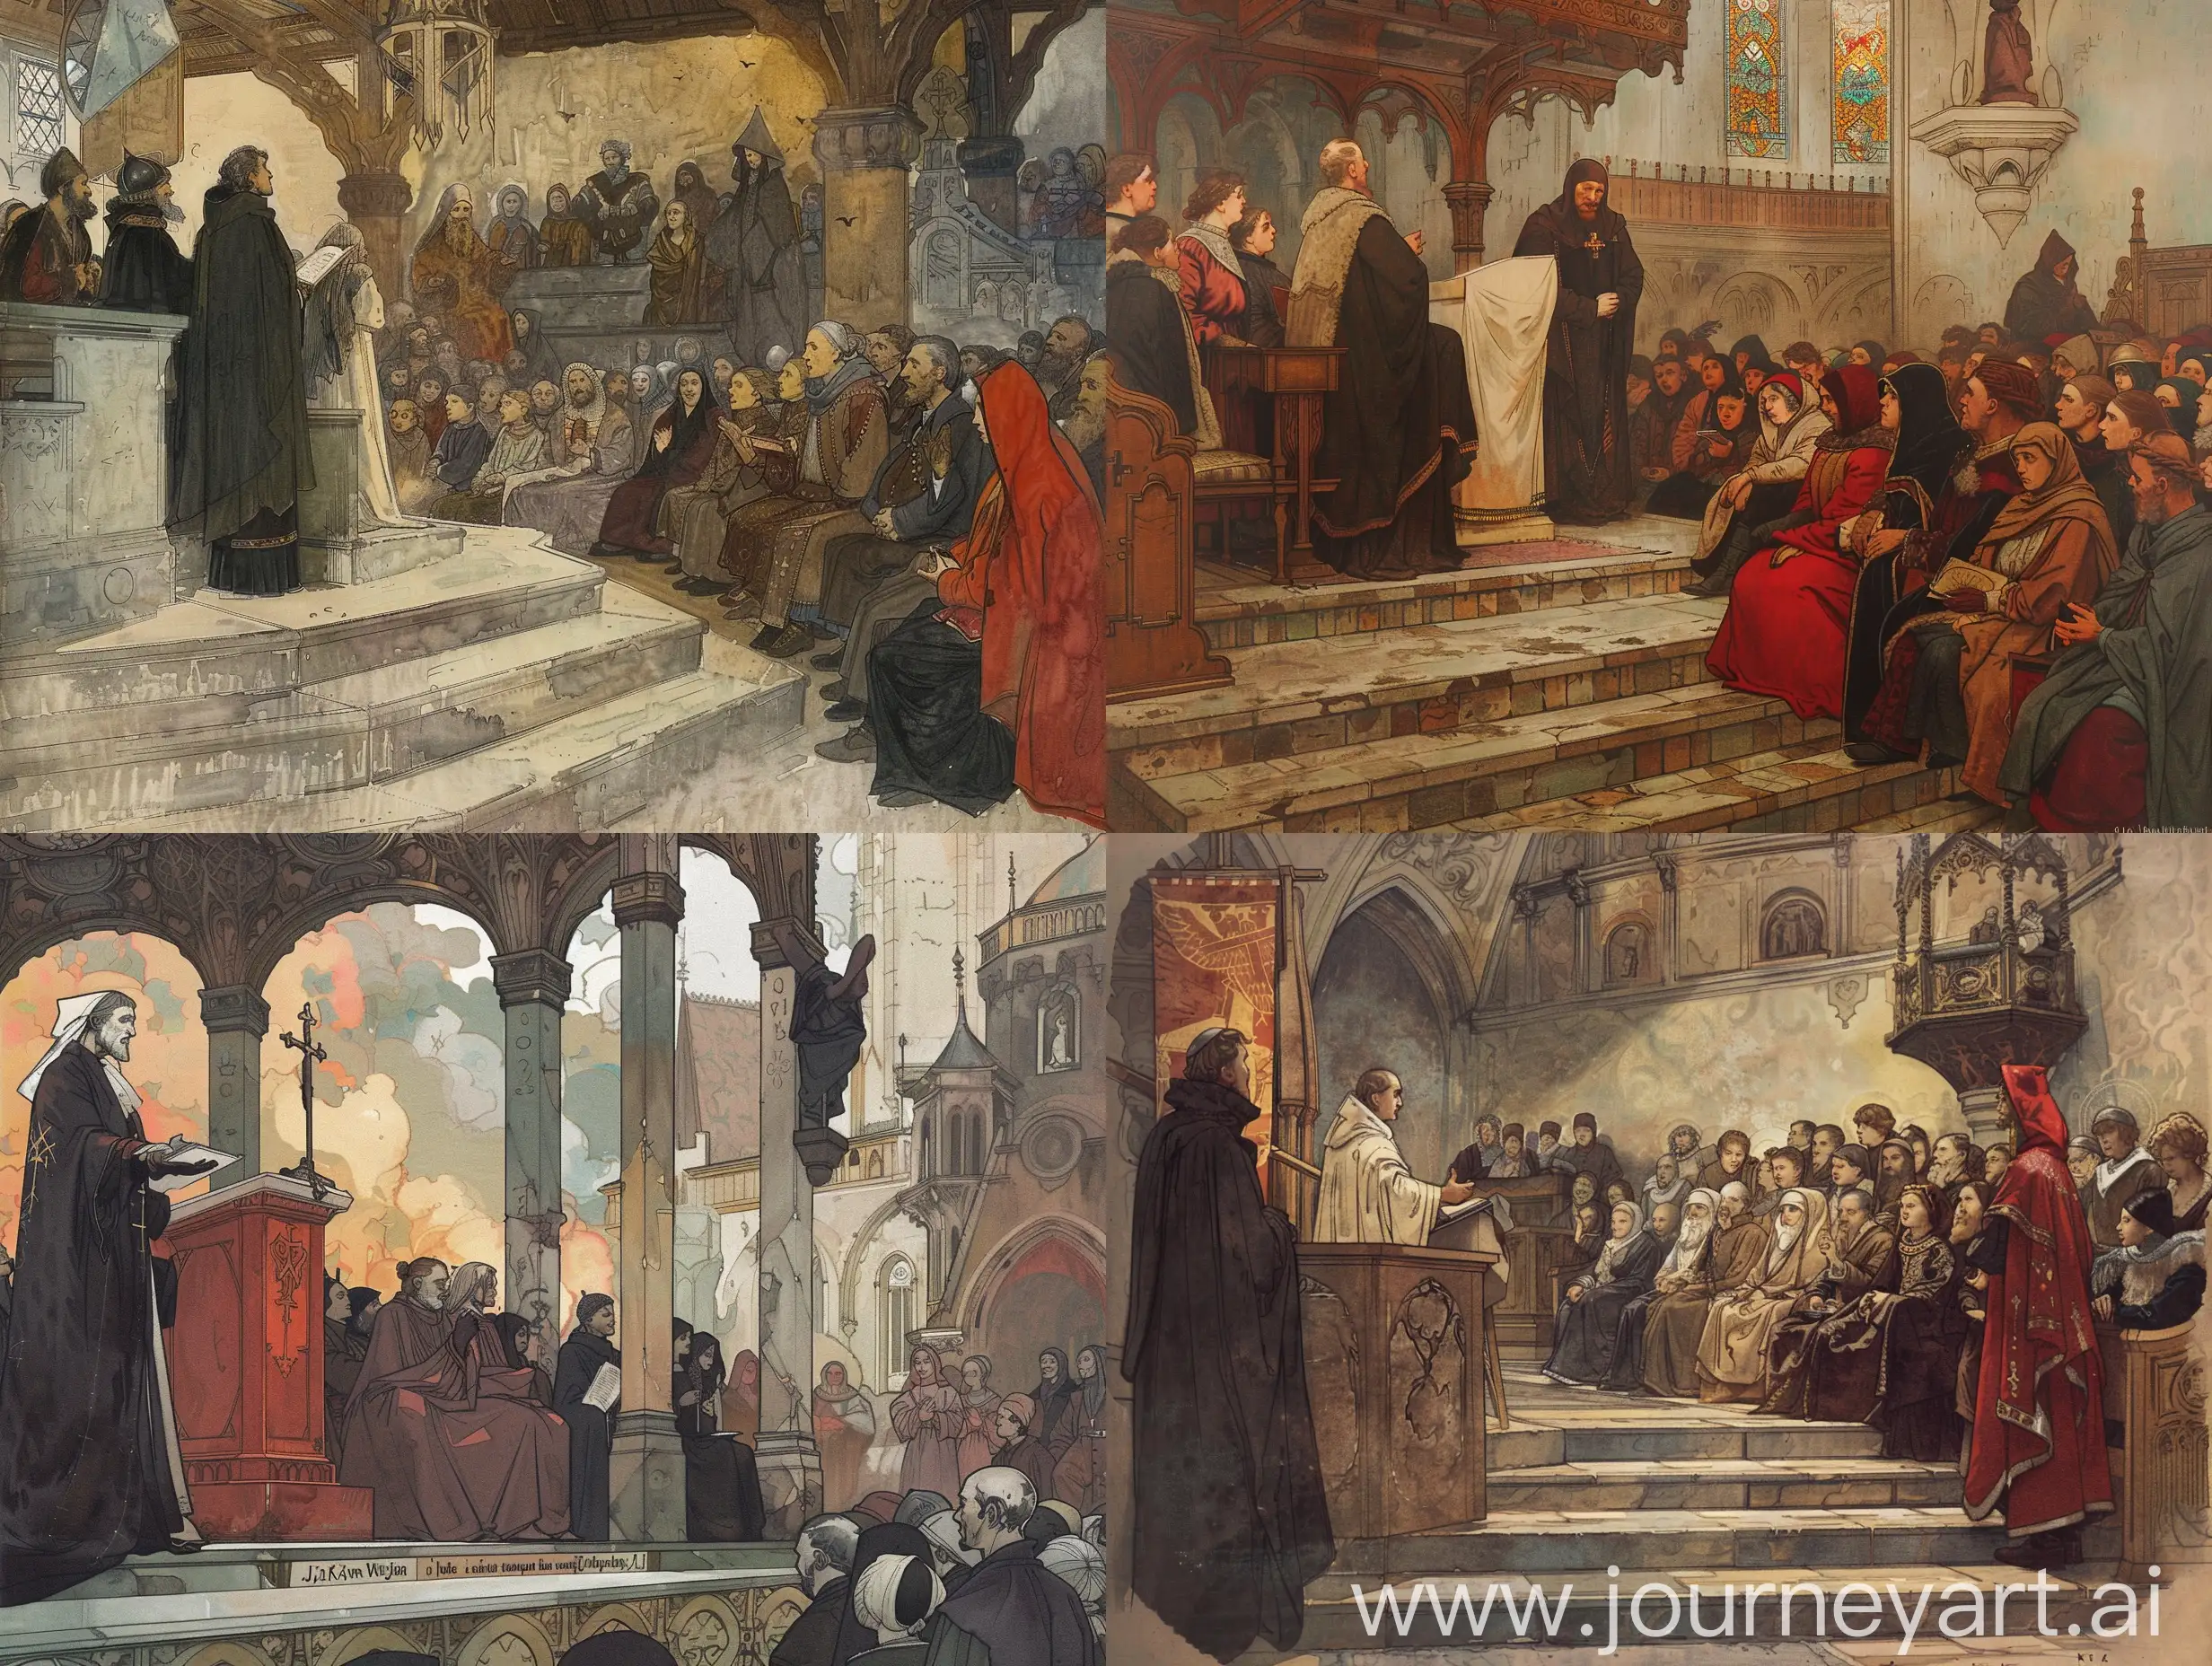 Master-Jan-Hus-Preaching-in-Bethlehem-Chapel-Prague-1412